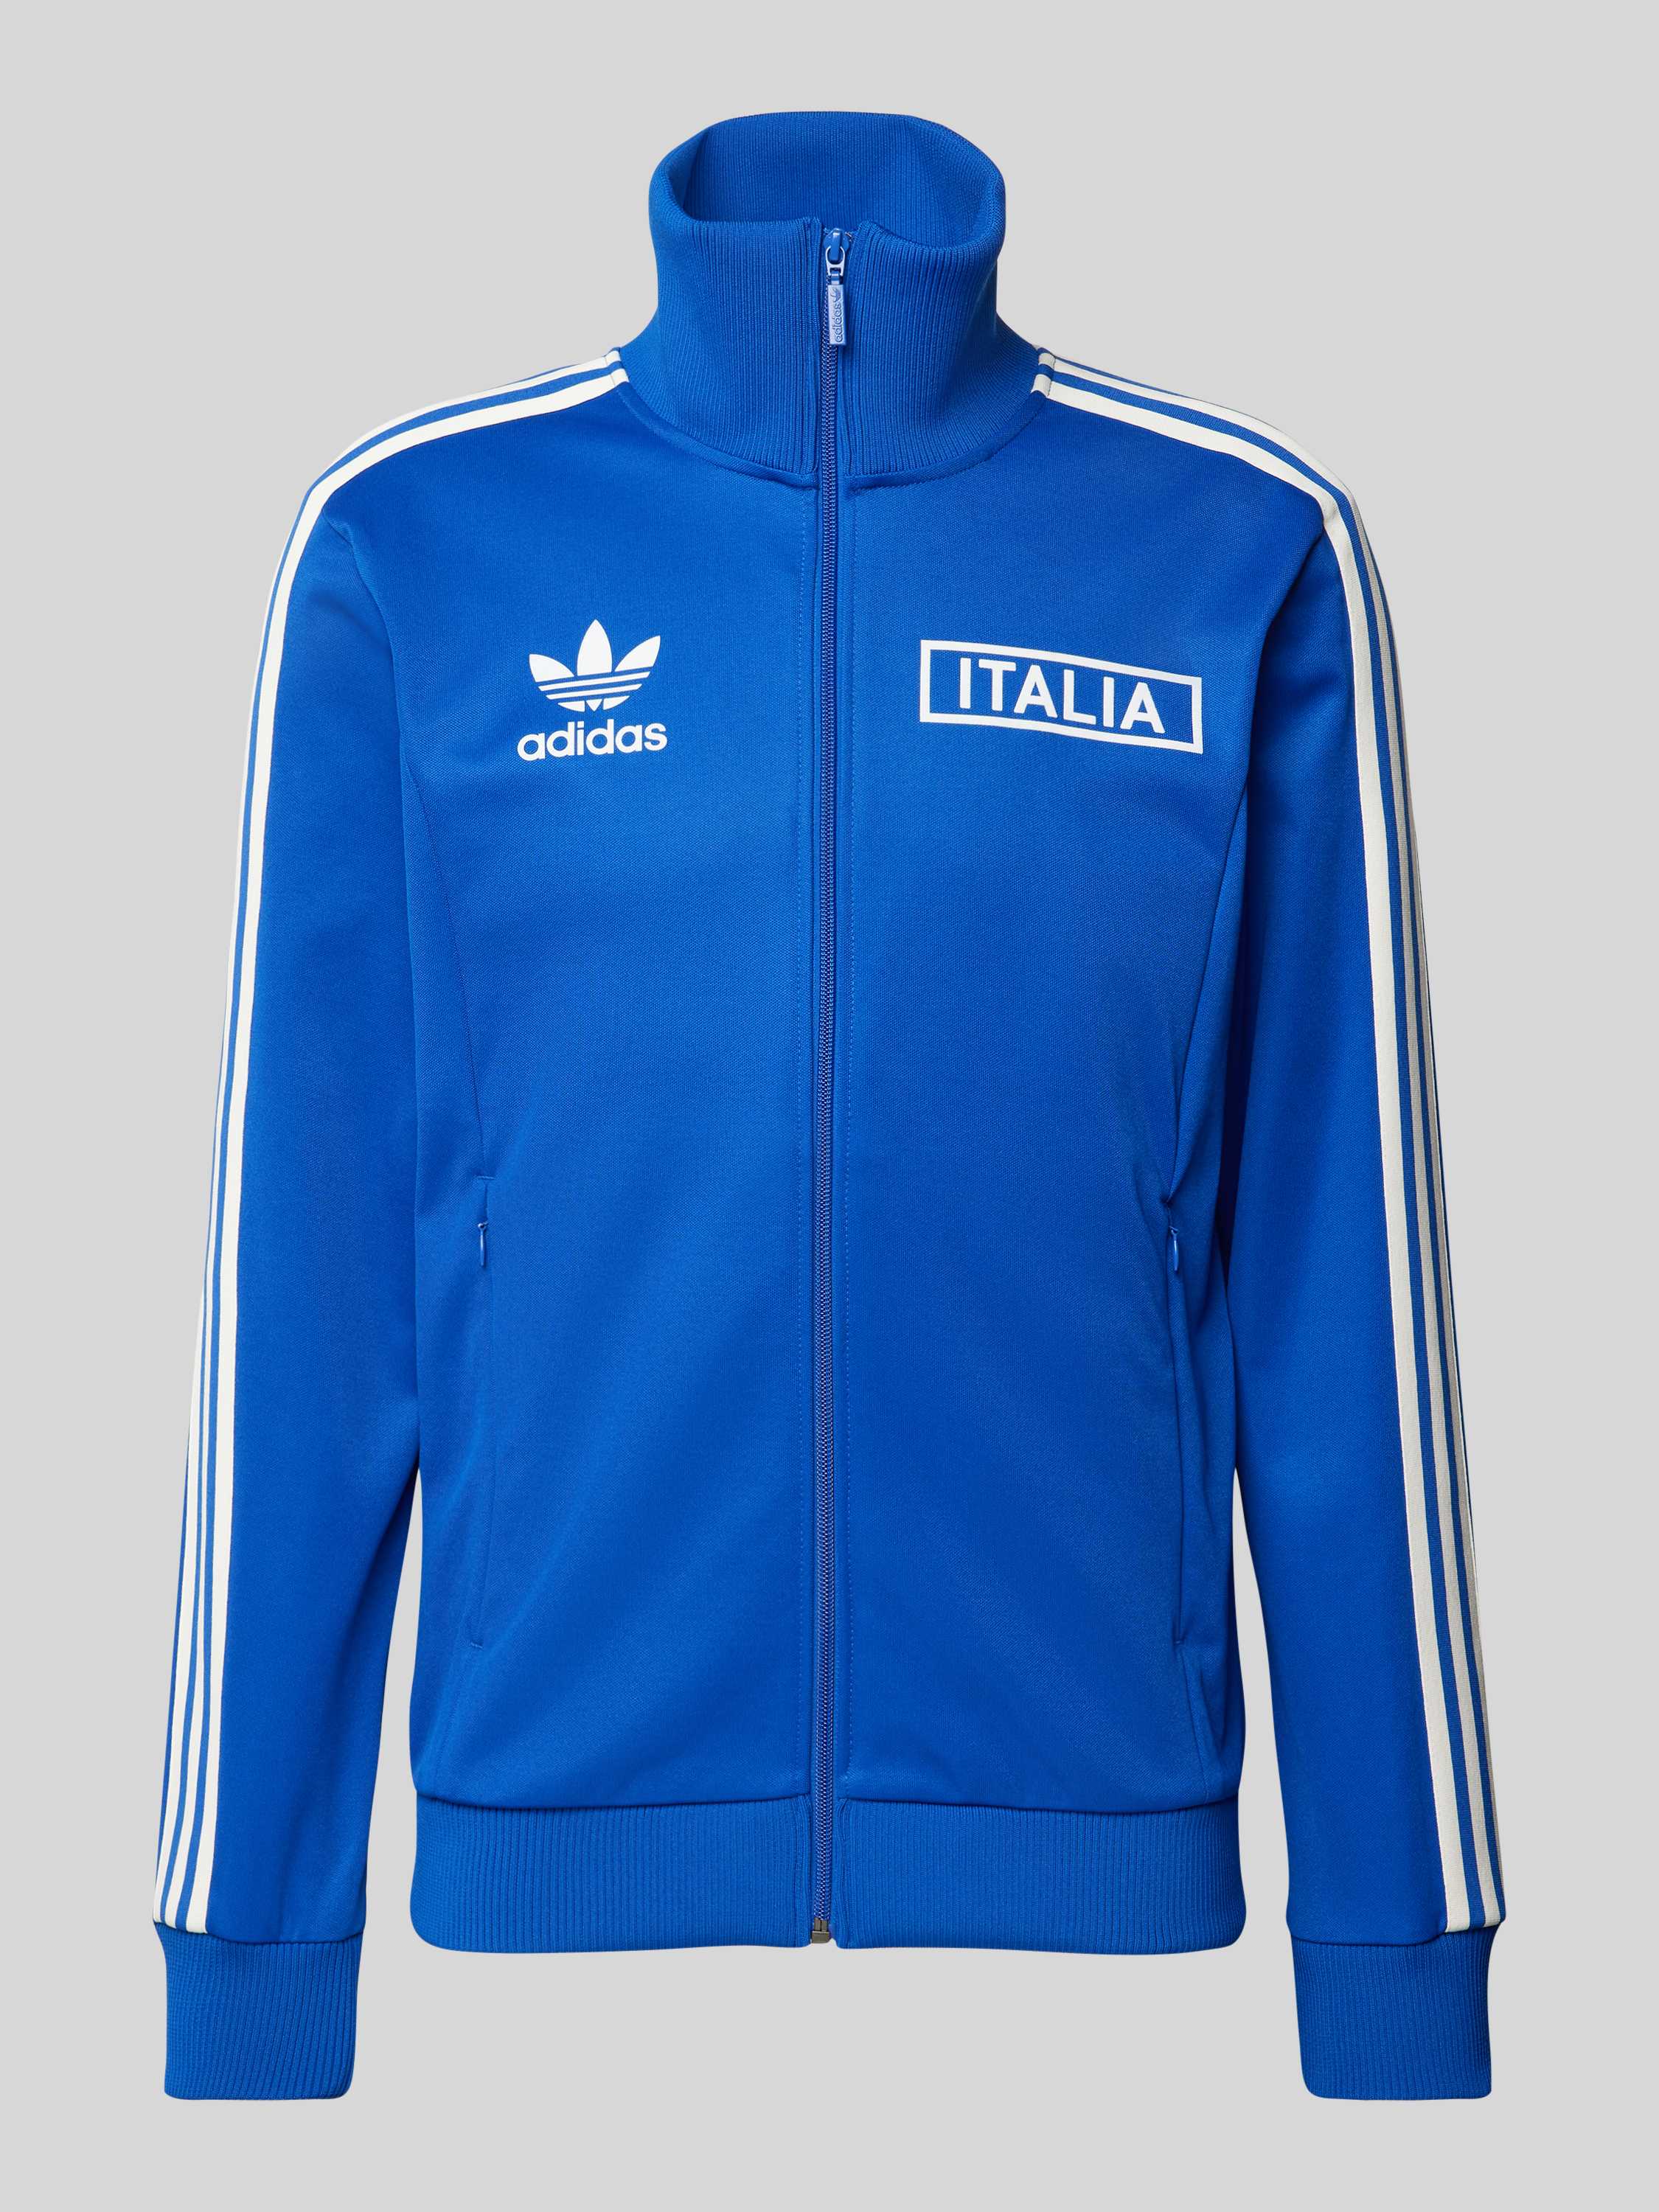 Adidas Italië Beckenbauer Sportjack Royal Blue- Royal Blue